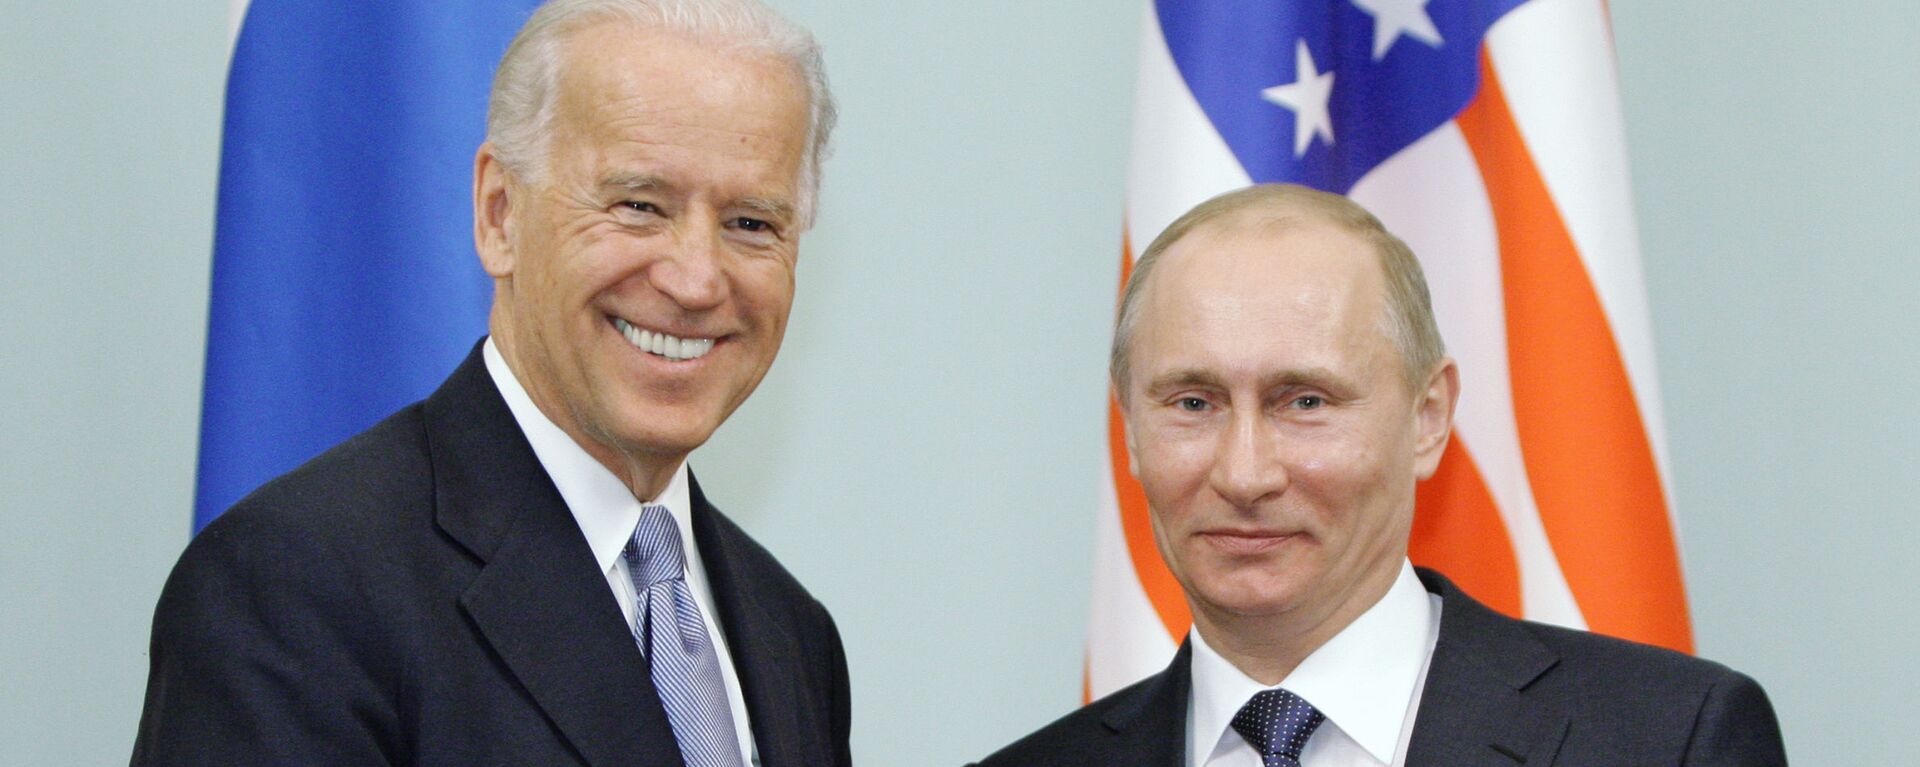 Joe Biden y Vladímir Putin en Rusia (archivo, año 2011) - Sputnik Mundo, 1920, 23.05.2021